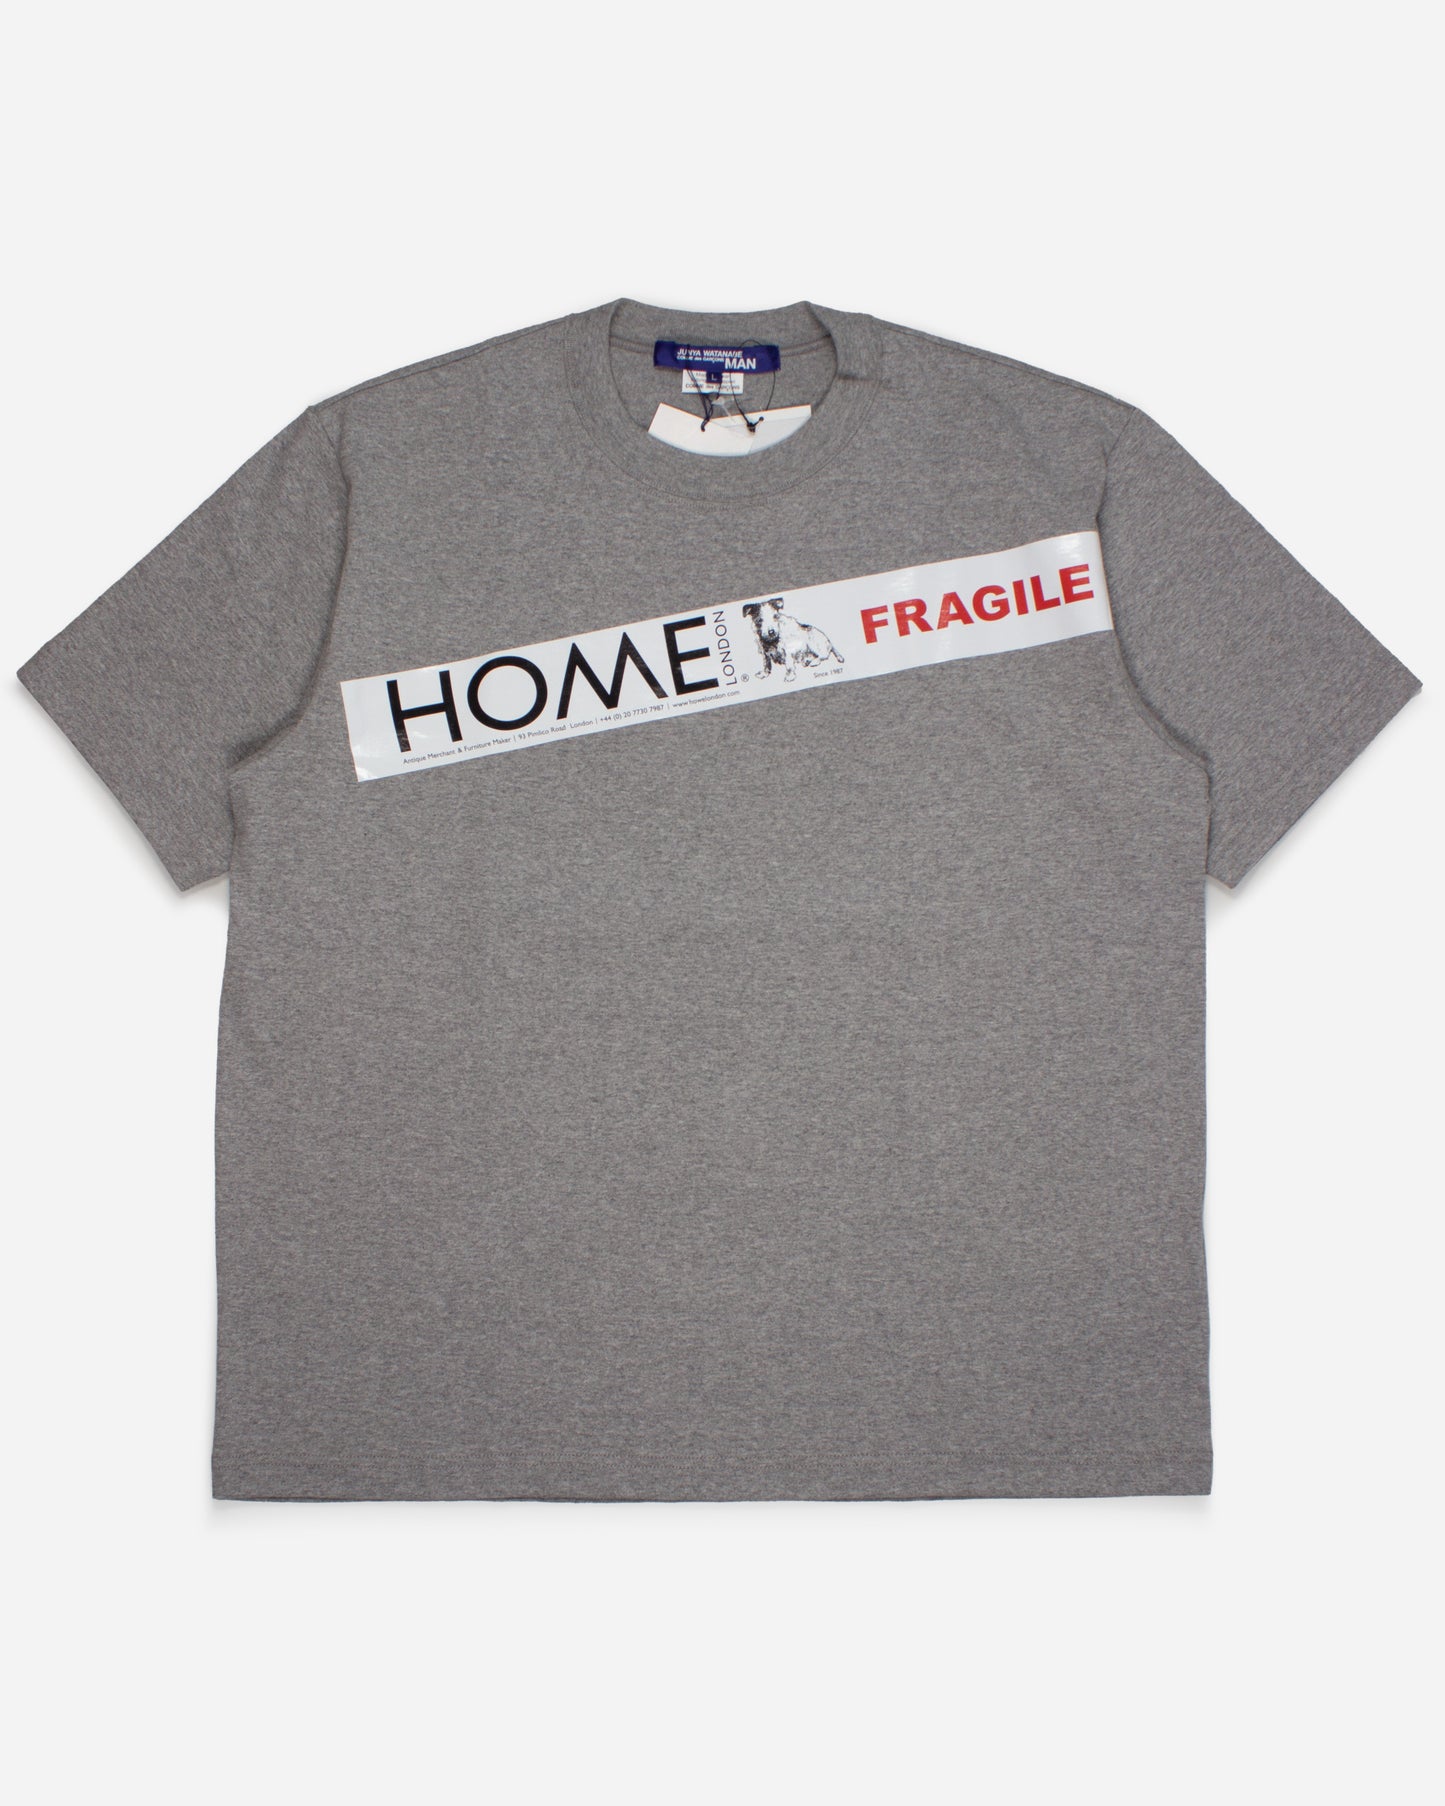 Home Fragile T-shirt